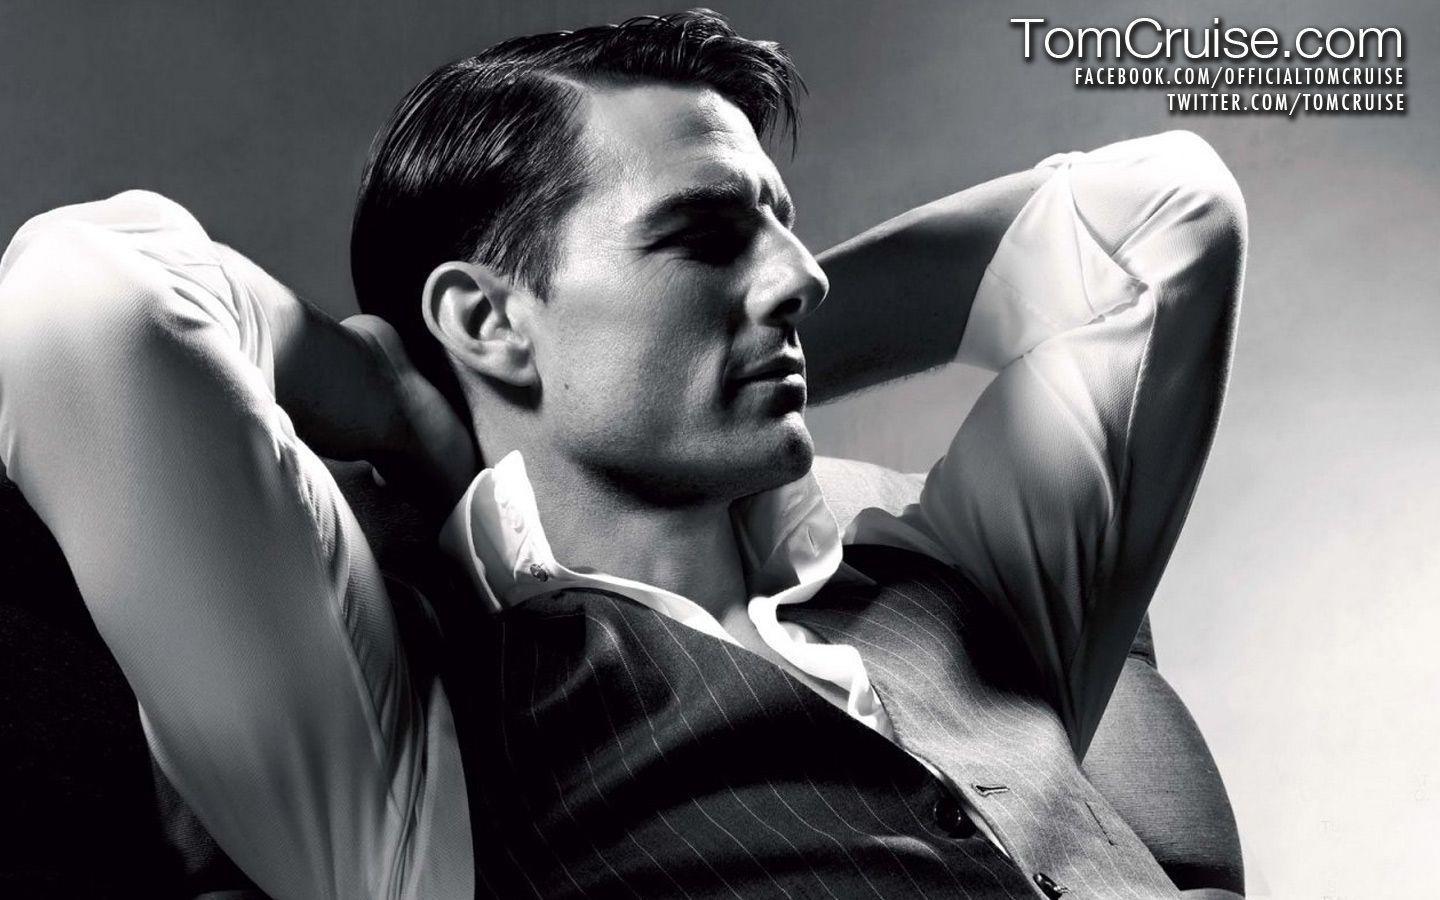 Exclusive Tom Cruise Wallpaper, February Newsletter, TomCruise.com